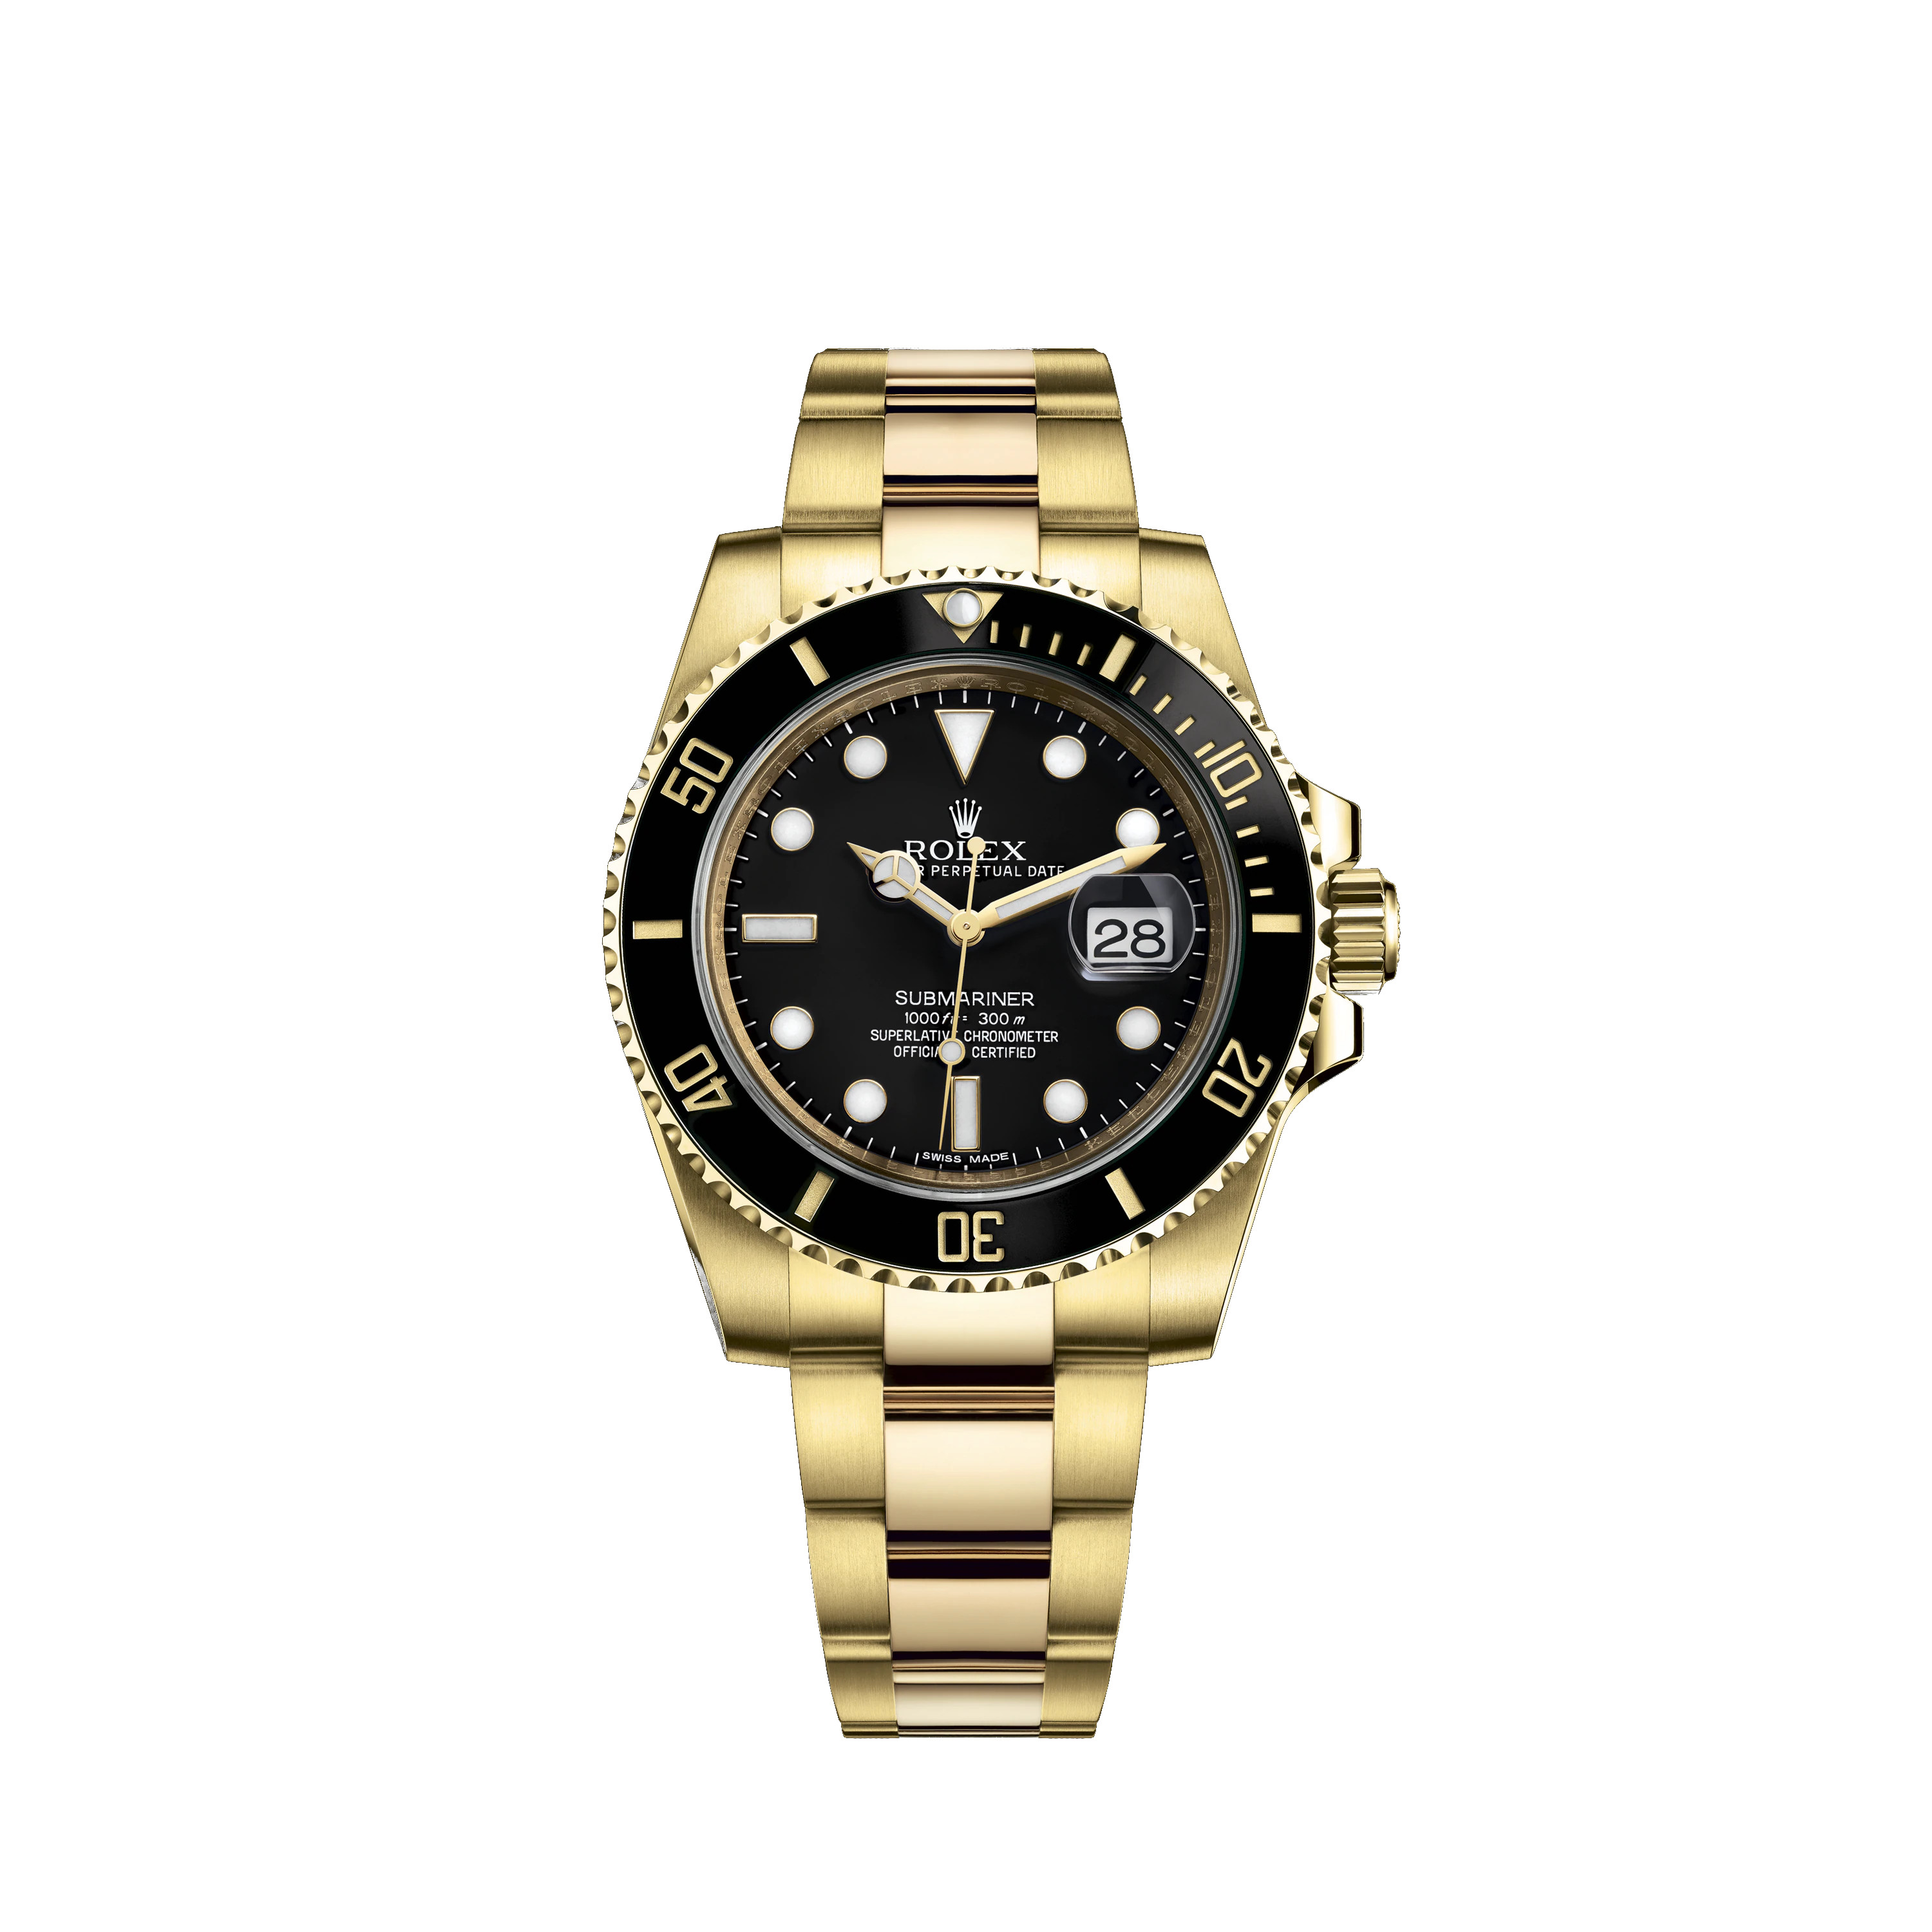 Submariner 116618LN Gold Watch (Black)